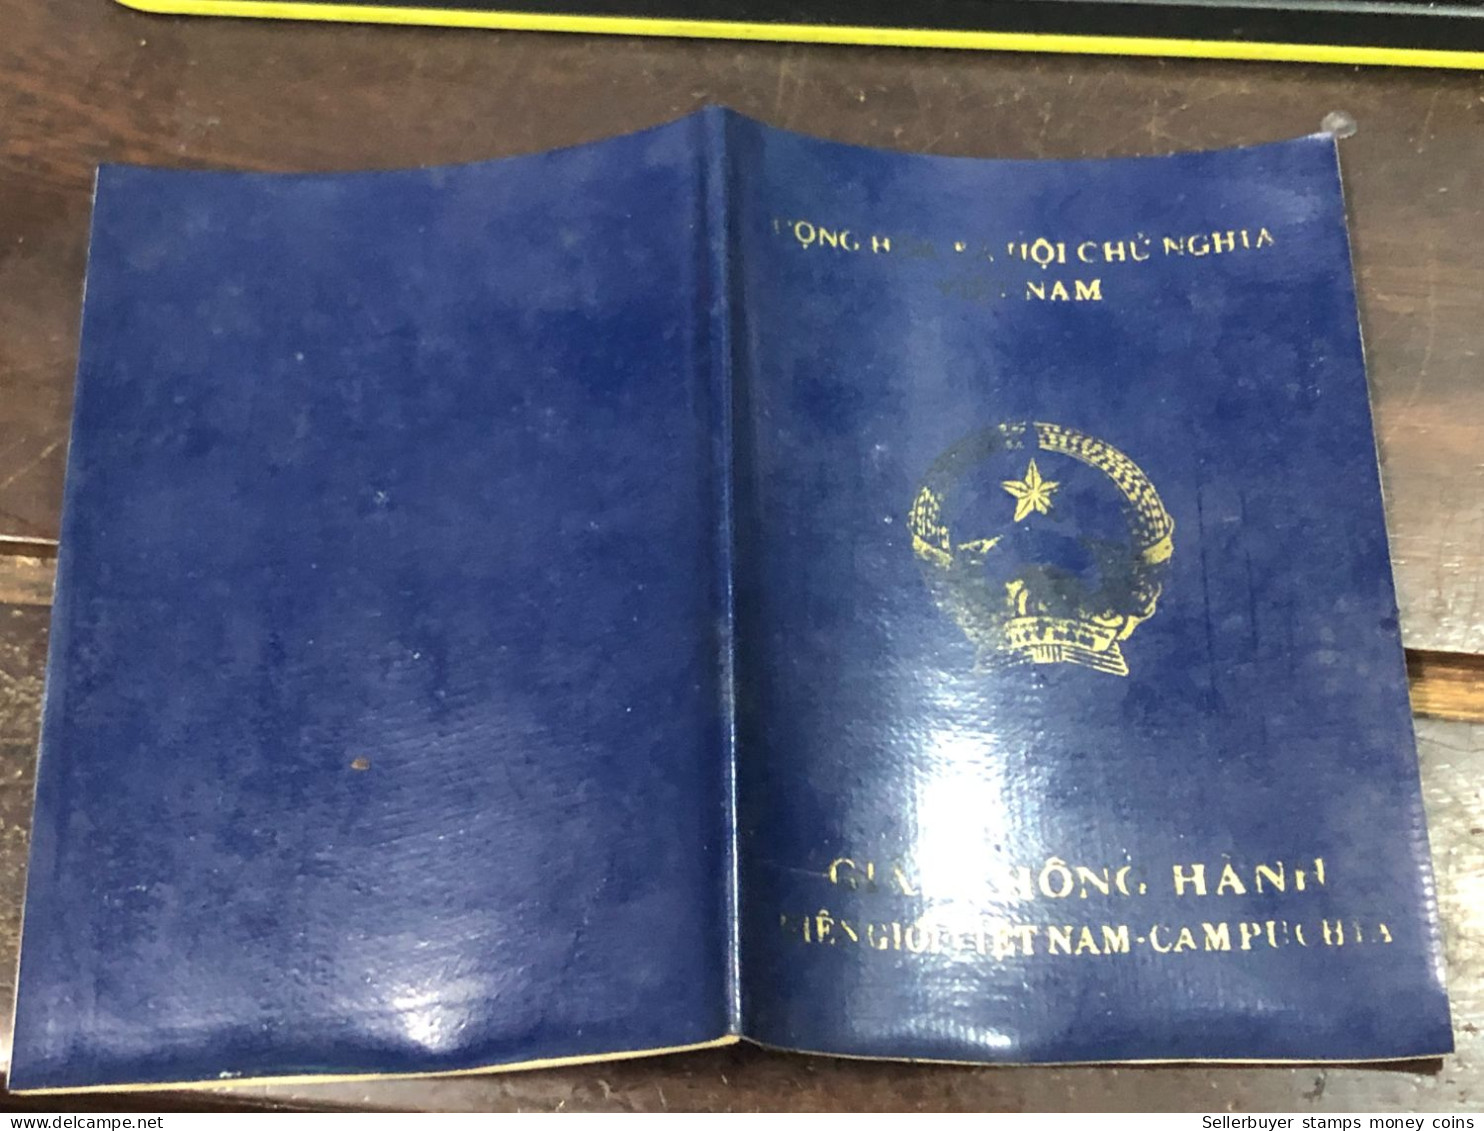 VIET NAM -OLD-GIAY THONG HANHID PASSPORT-name-TRIEU LAI CHANH-1995-1pcs Book - Sammlungen